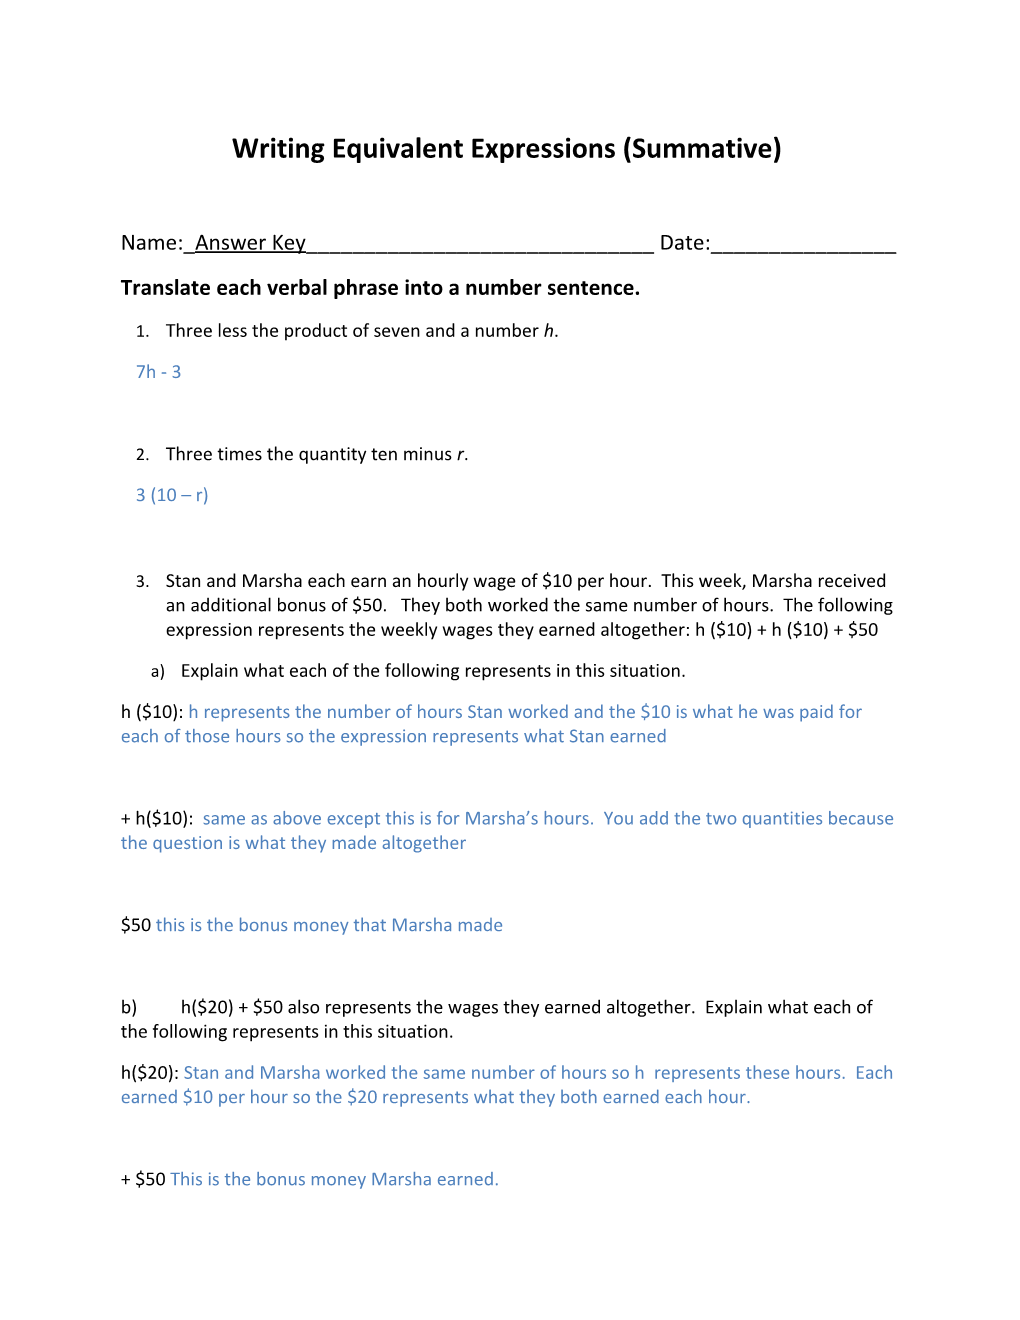 Writing Equivalent Expressions (Summative)